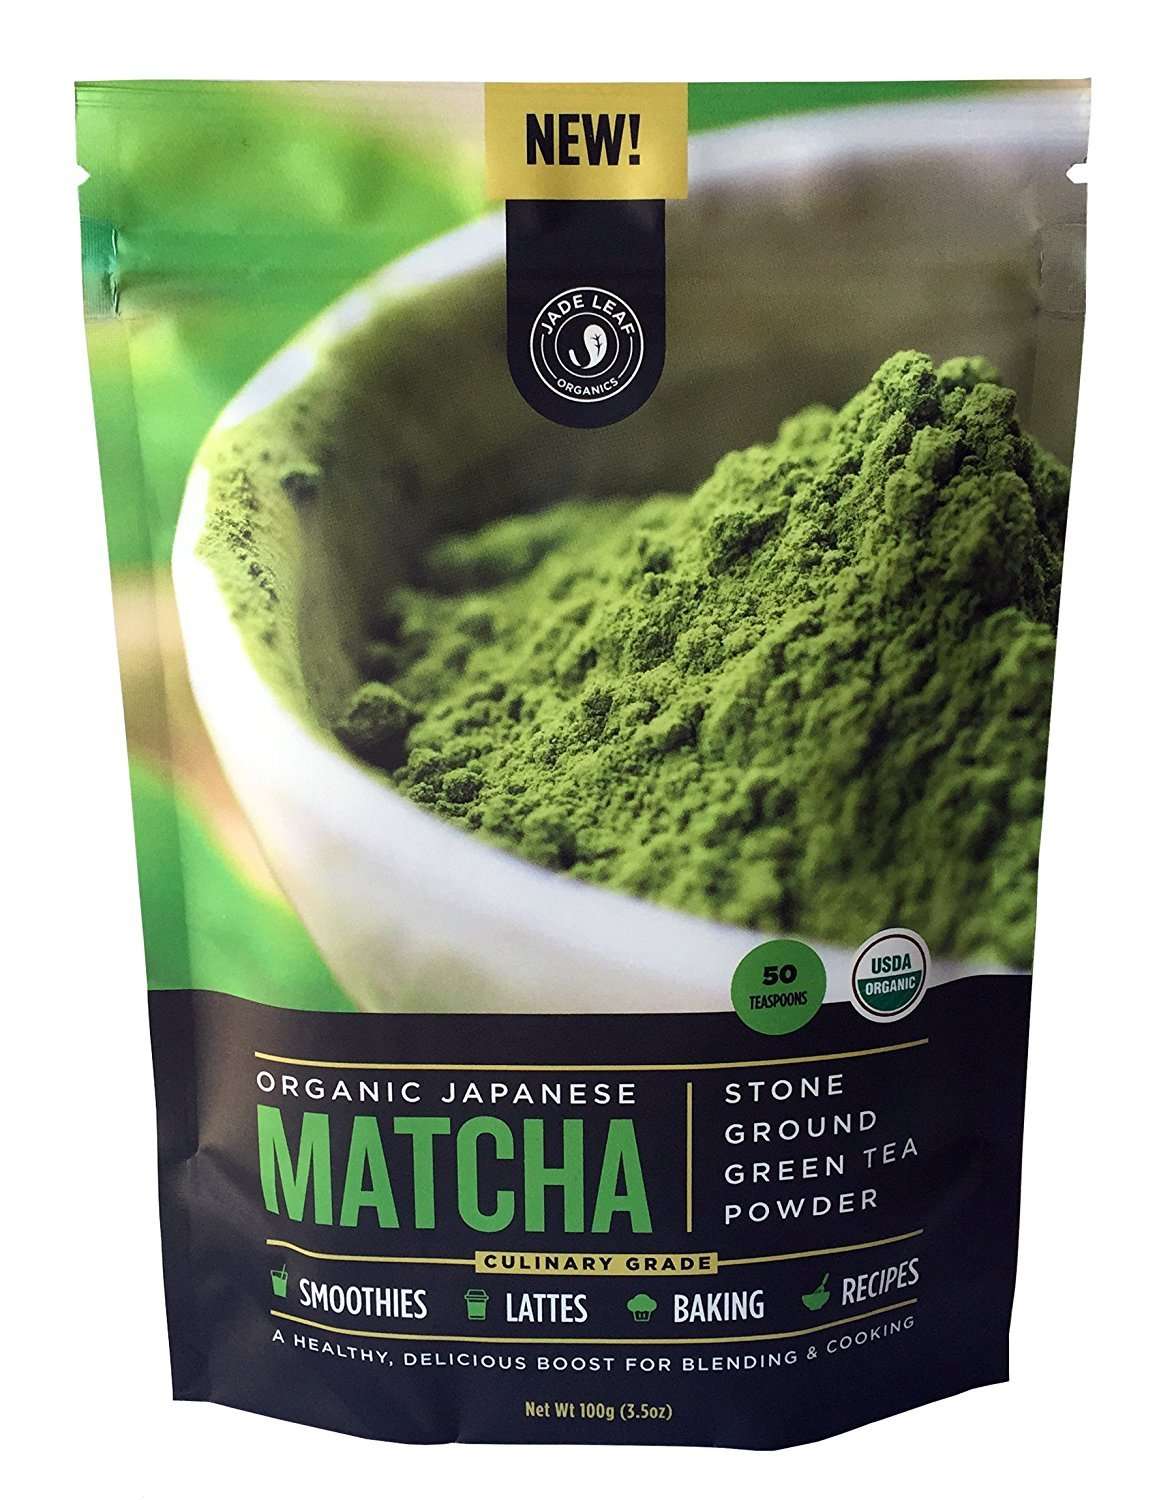 Organic Japanese Matcha Green Culinary Grade Tea Powder ...